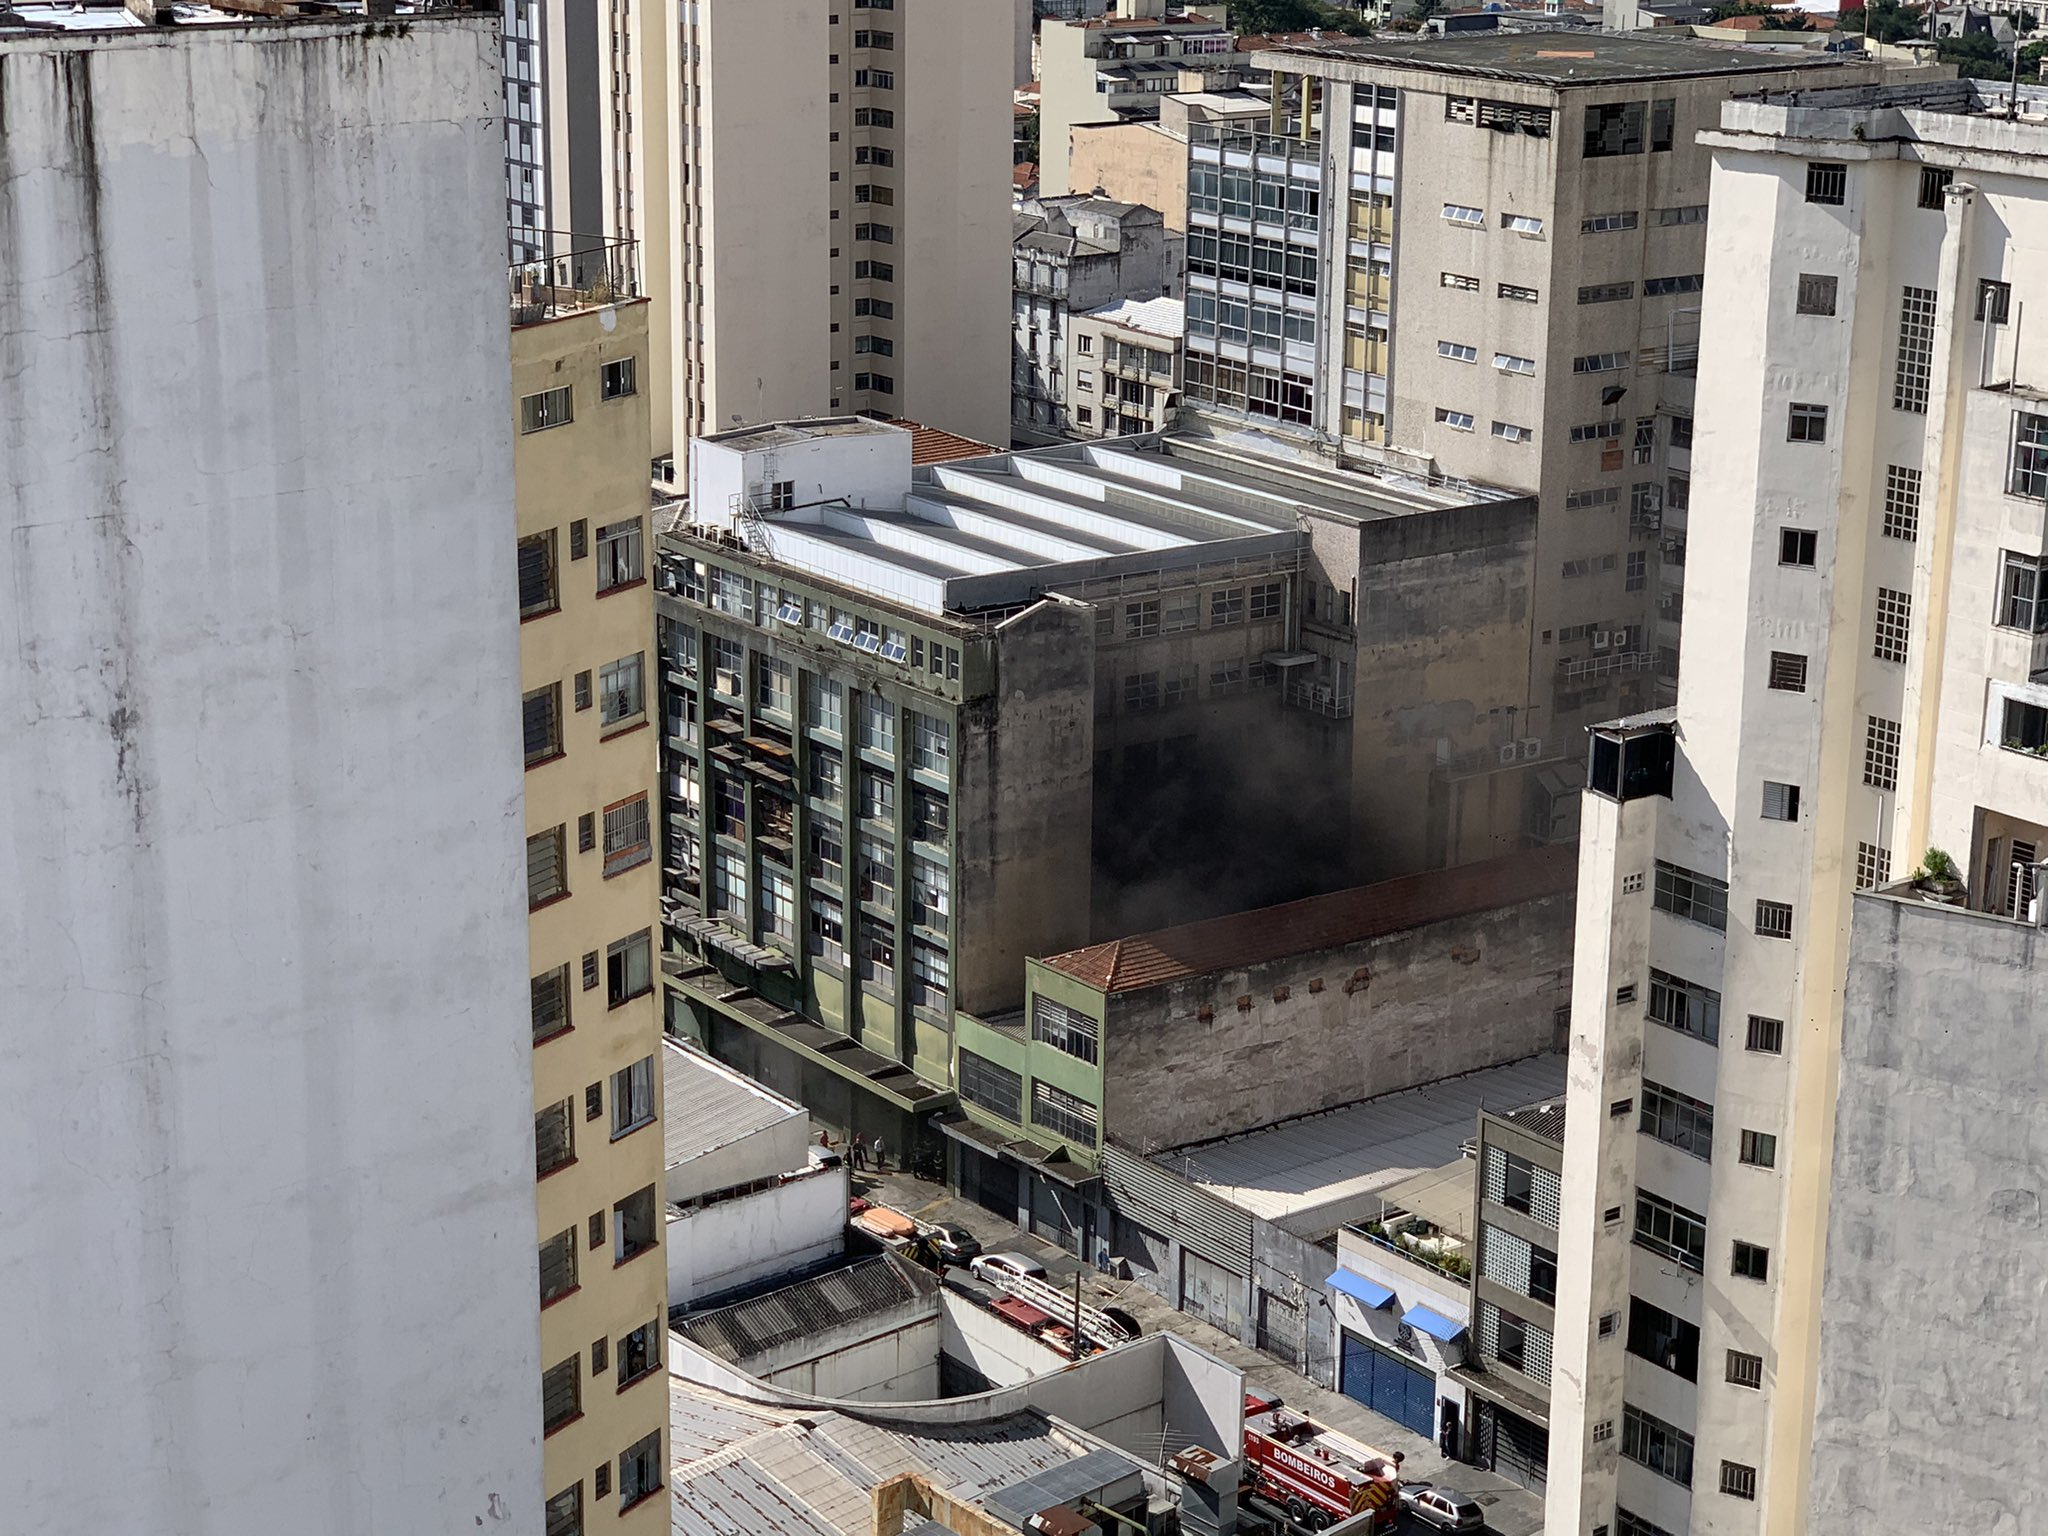 Incêndio atinge prédio sede do jornal Folha de S. Paulo